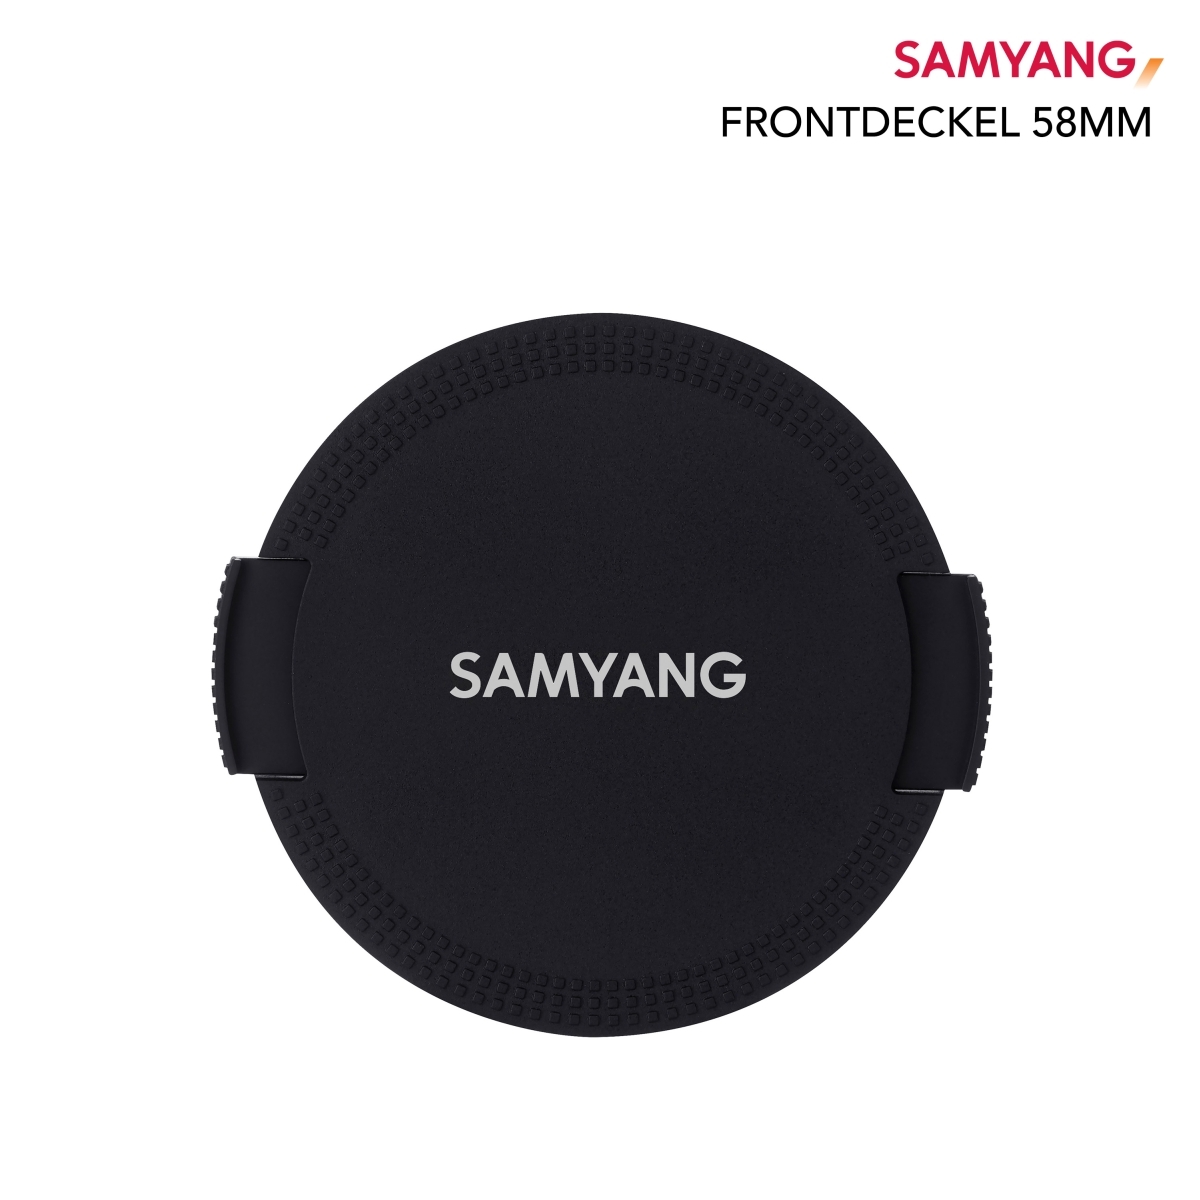 Couvercle frontal Samyang 58mm